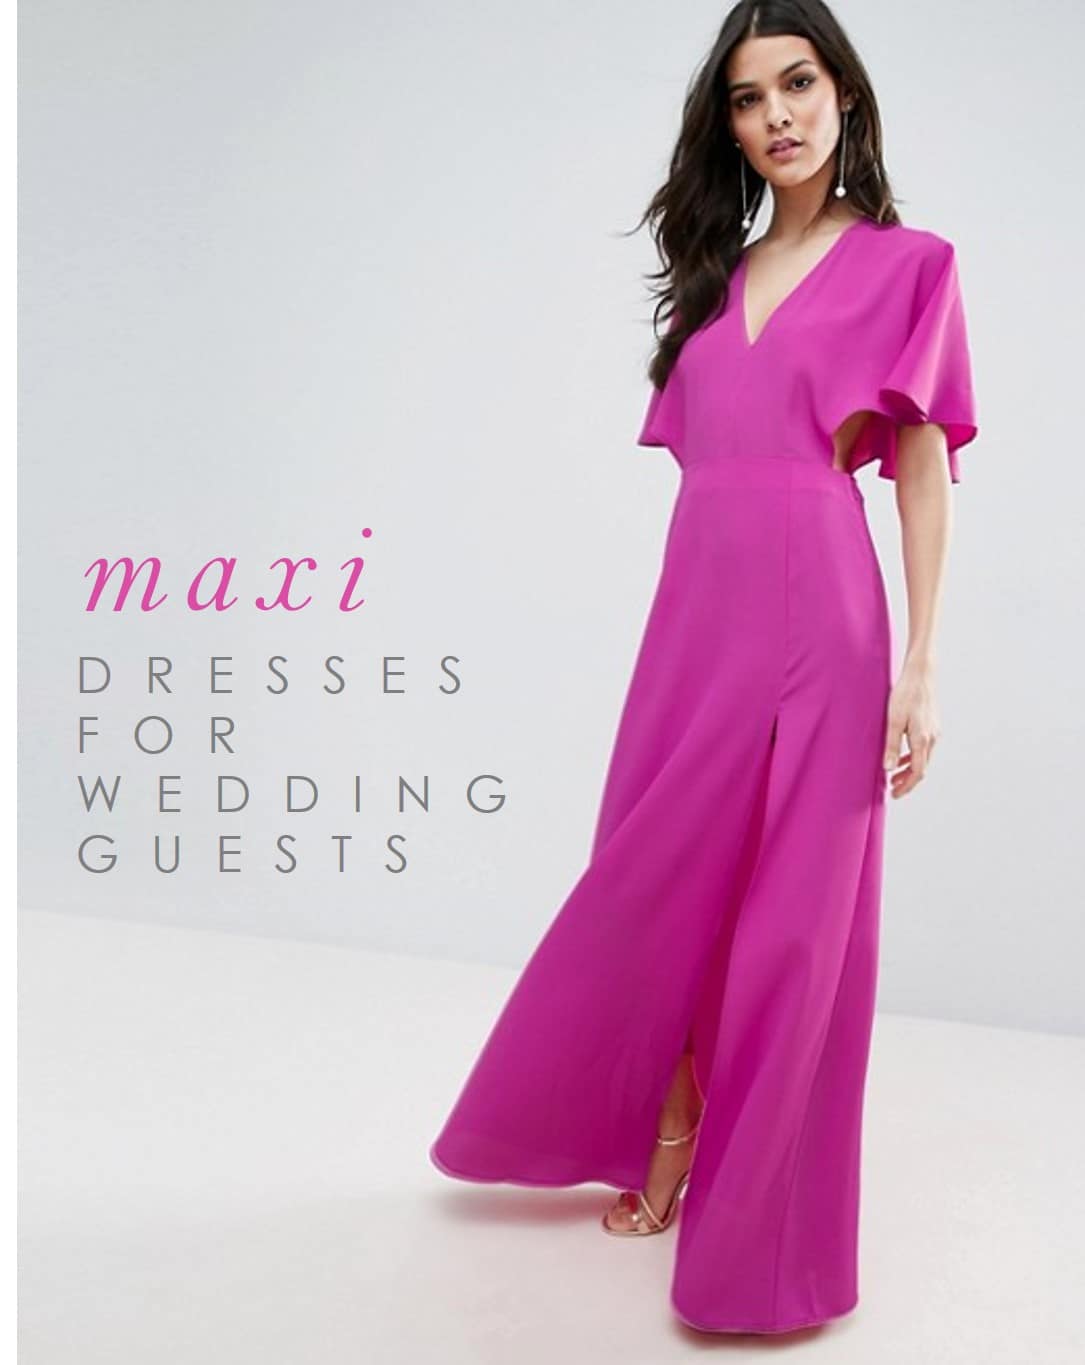 Maxi Dresses for Wedding Guests | Dress 